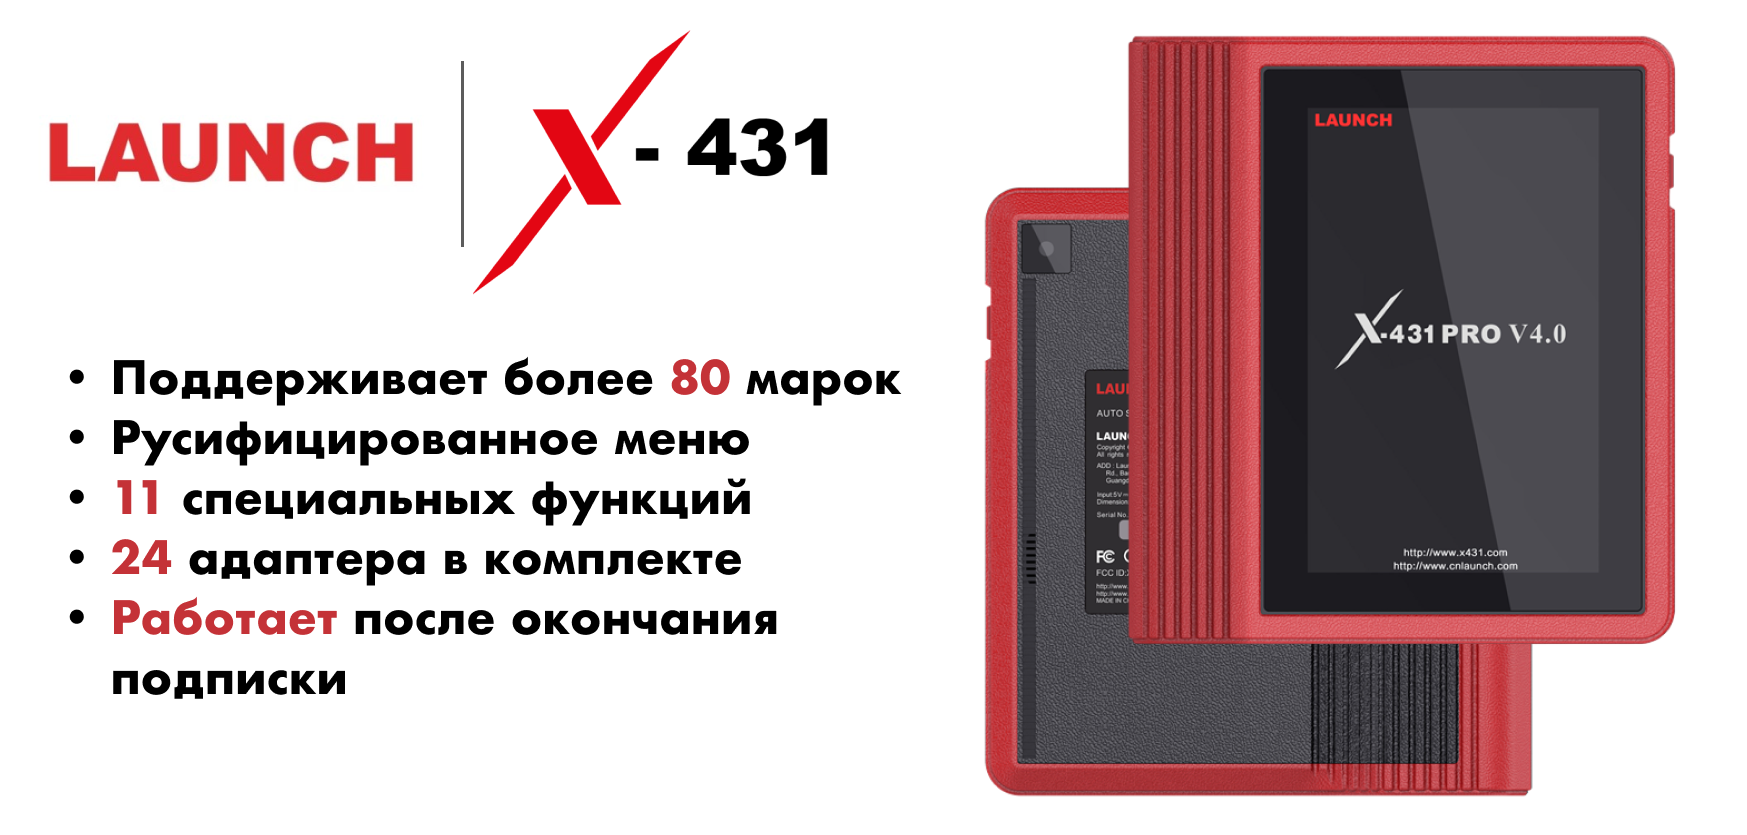 LAUNCH X-431 pro 4.0 преимущества